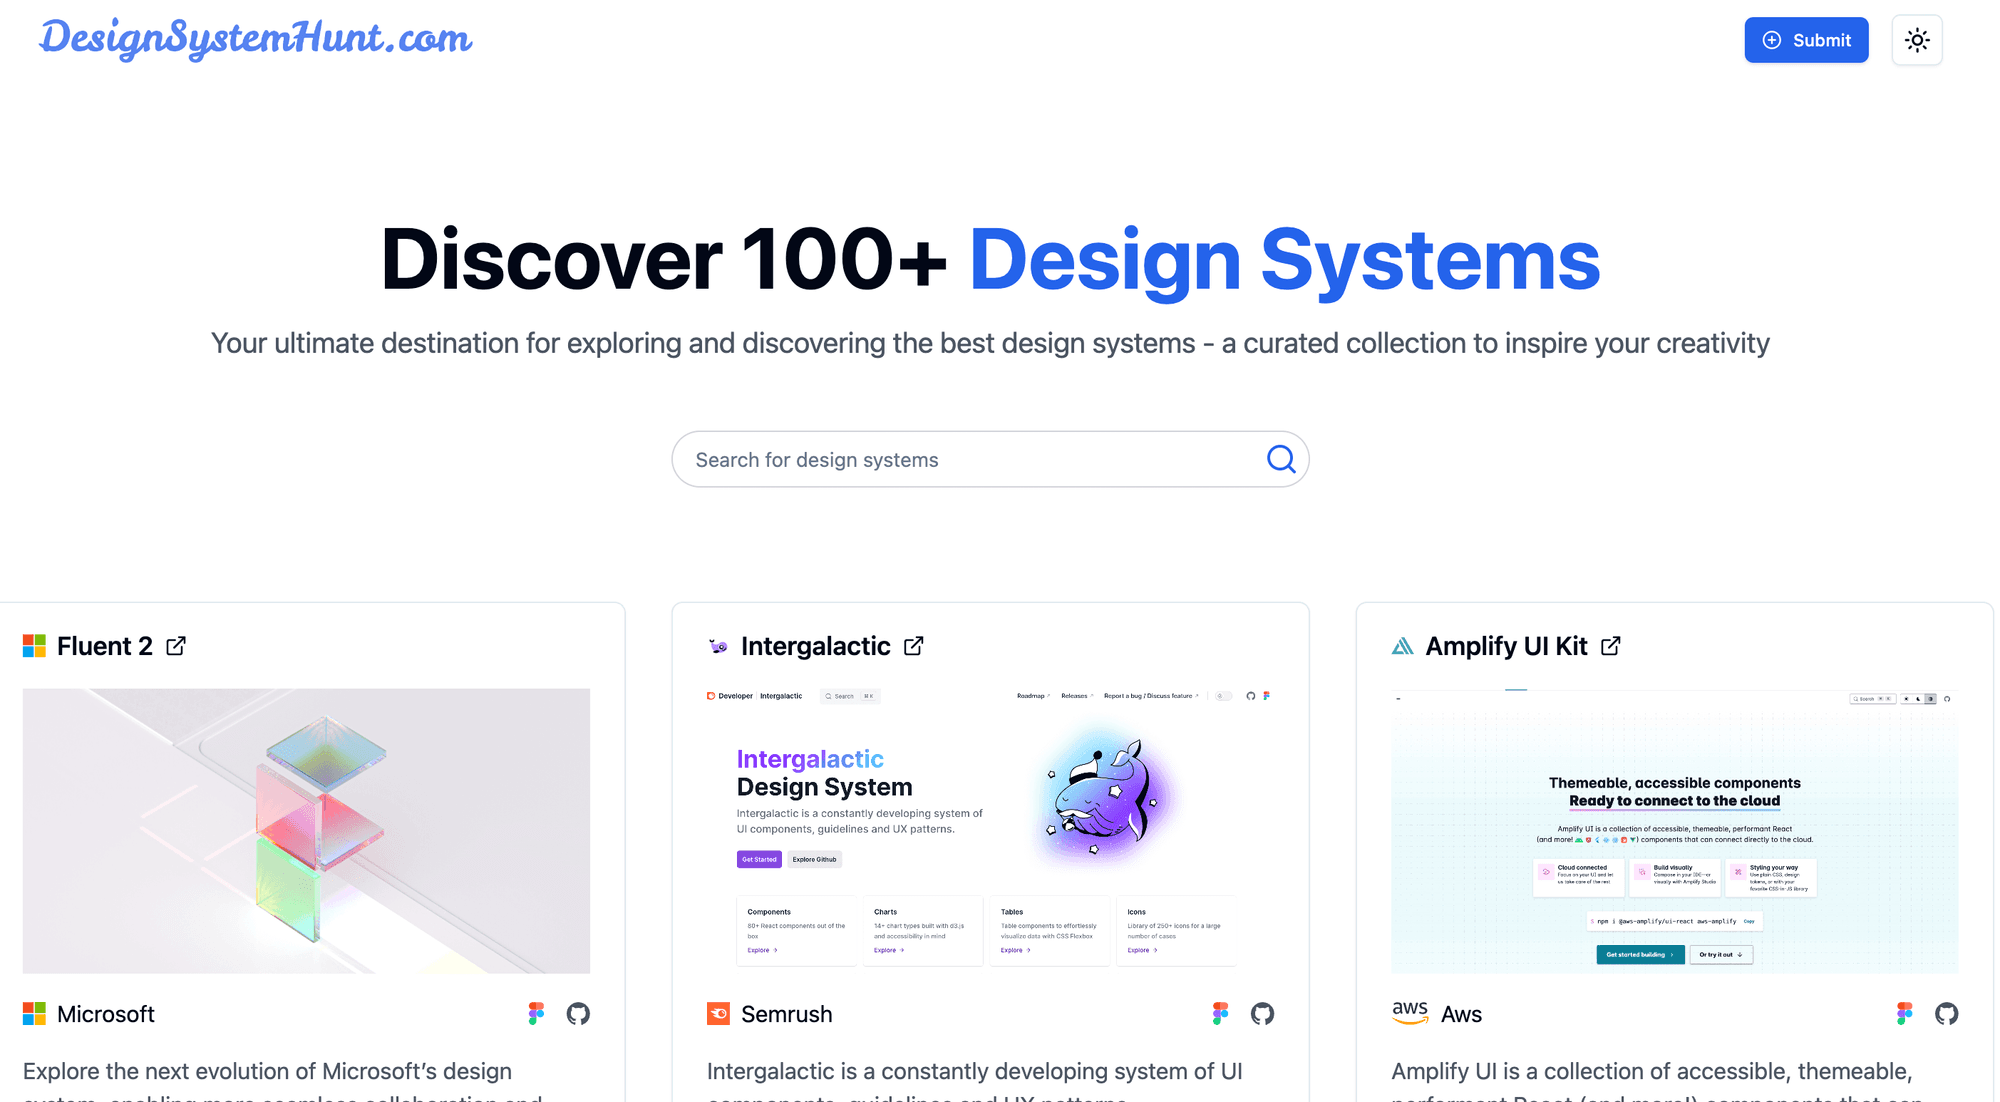 DesignSystemHunt.com